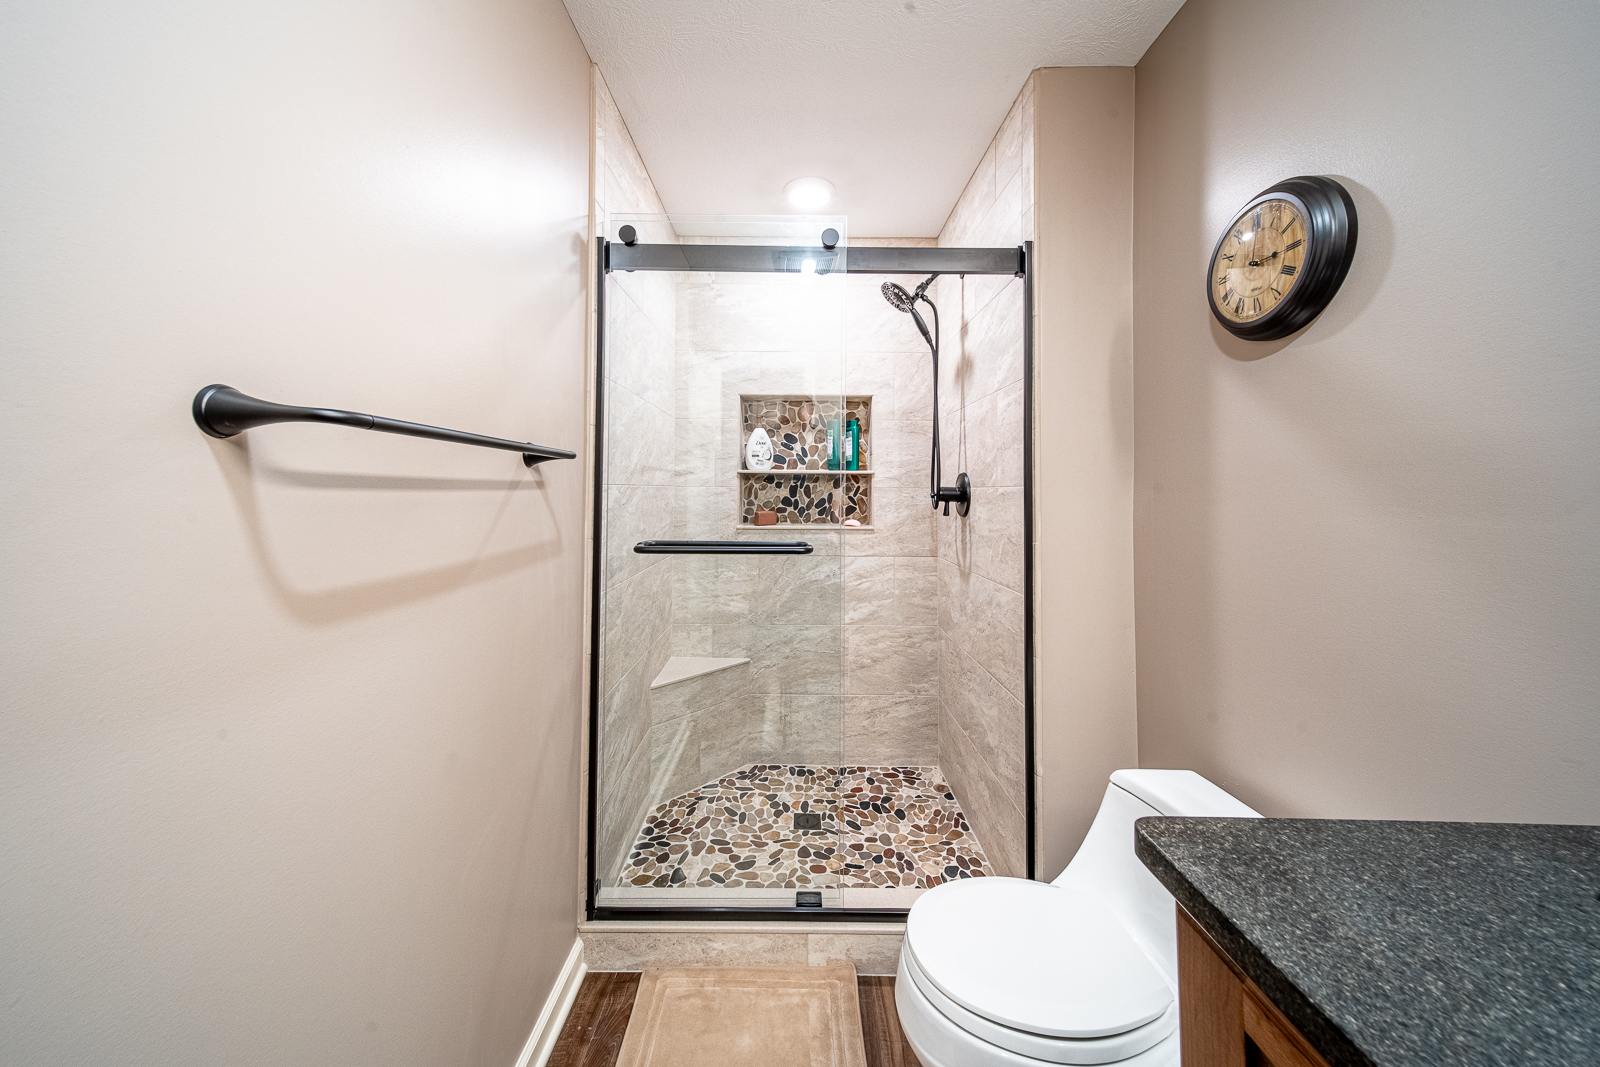 Elegant walk-in shower in the full bathroom of Ripple Creek Drive basement renovation.